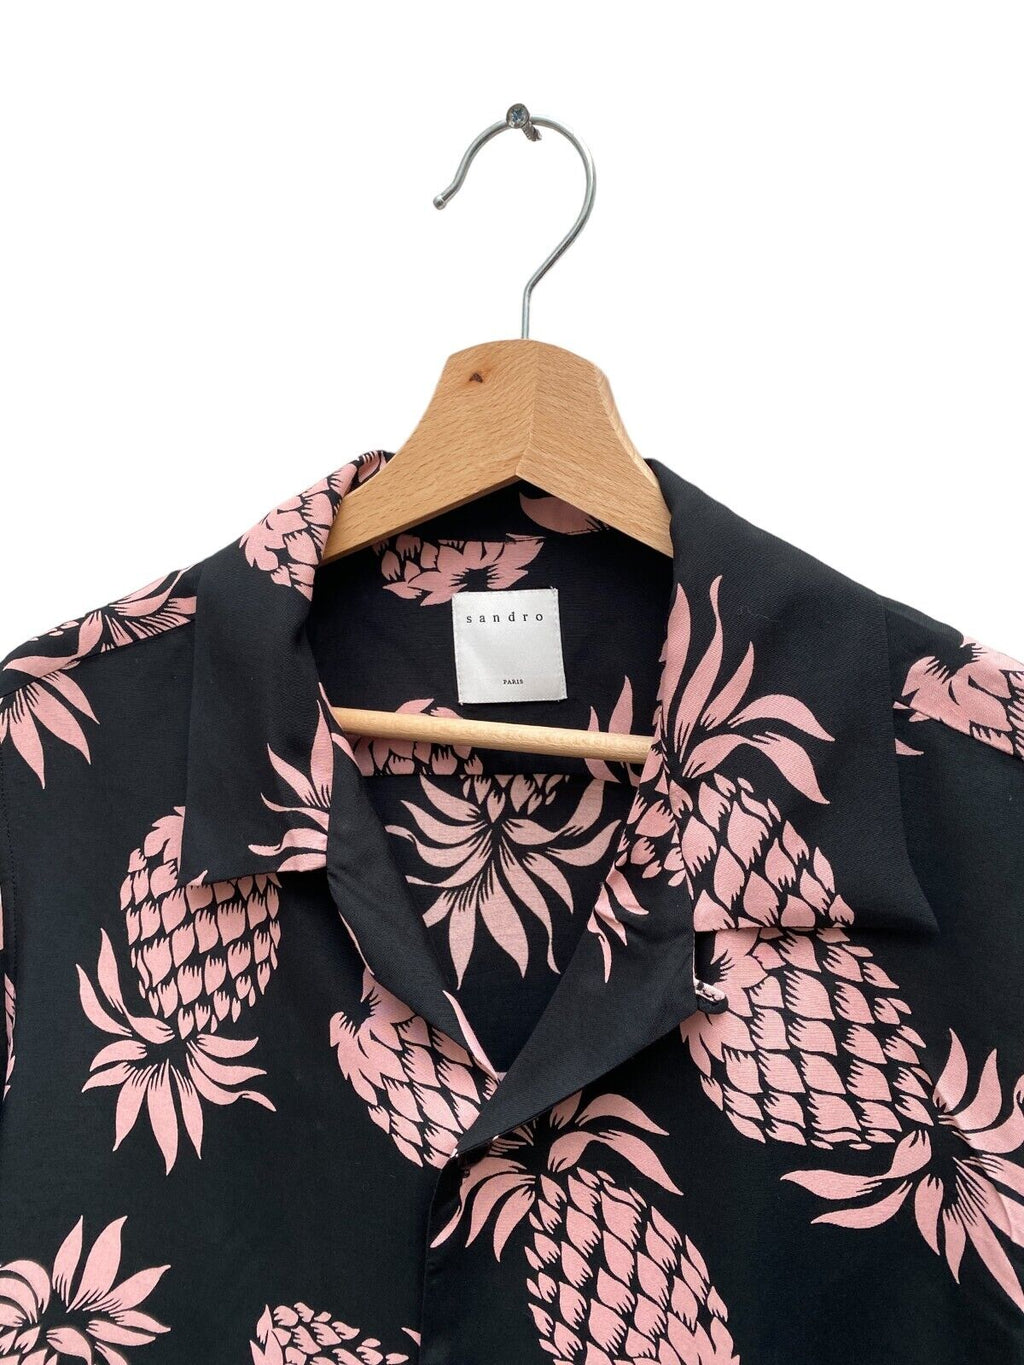 Black Pink Hawaiian short sleeves shirt Size M (fits S)